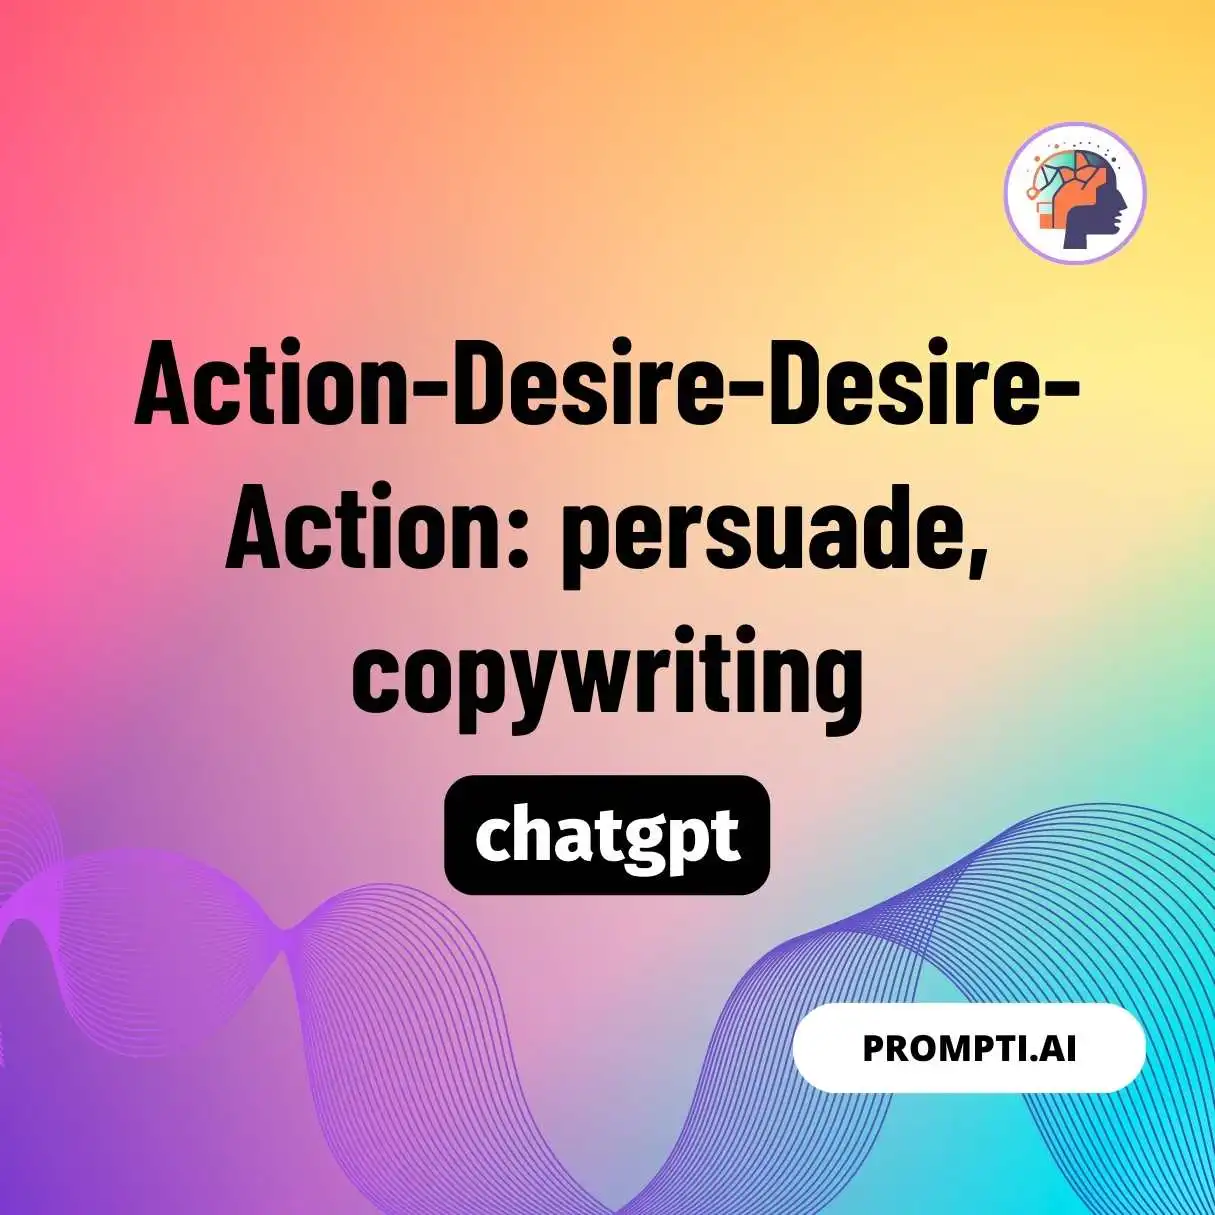 Action-Desire-Desire-Action: persuade, copywriting